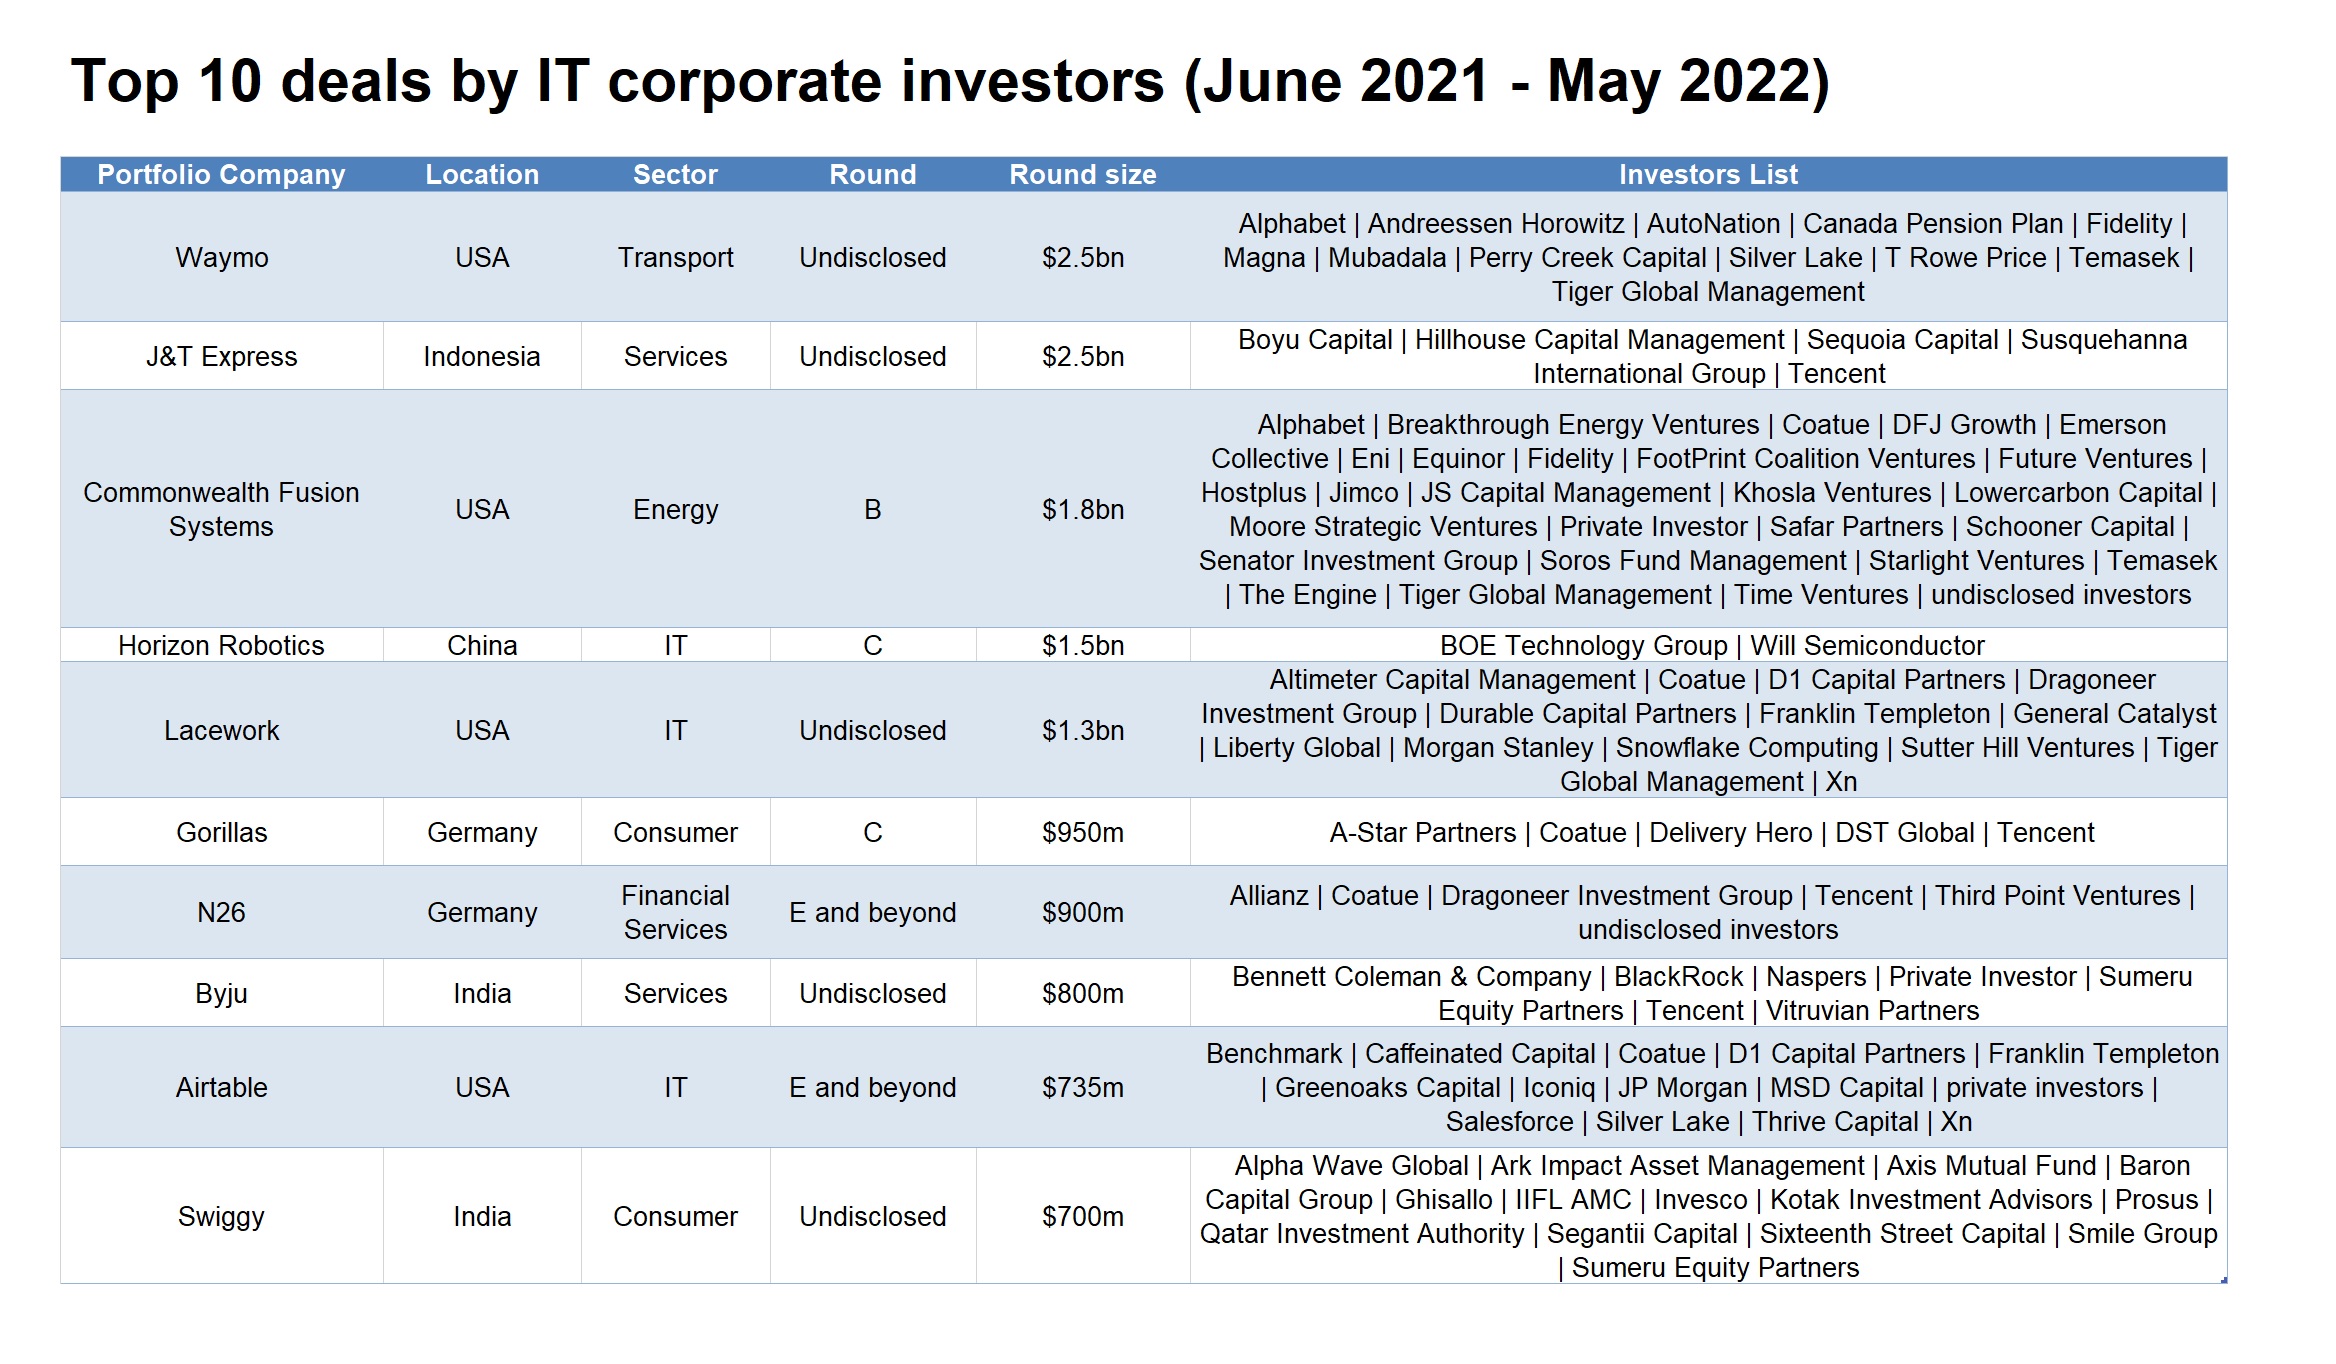 Top 10 deals for corporate investors in IT sector